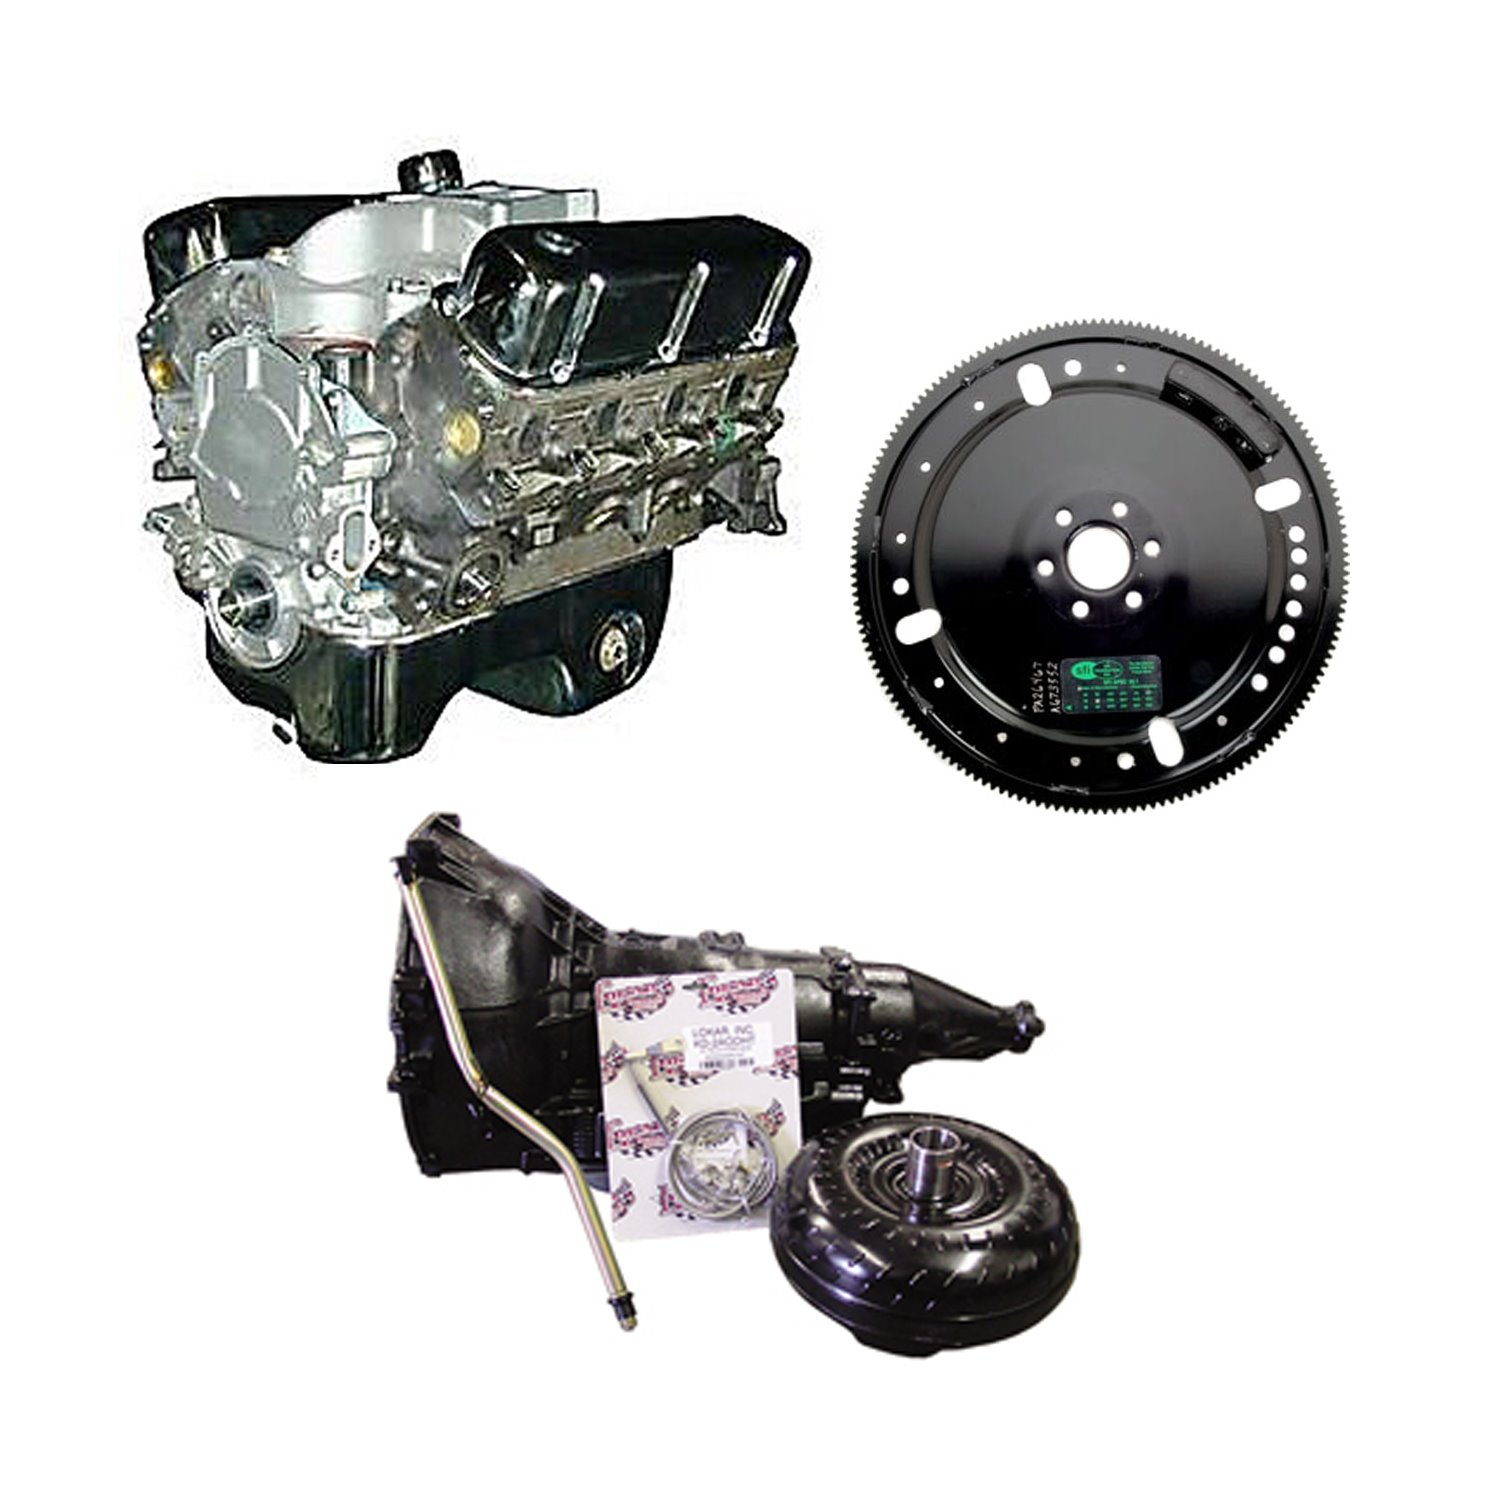 Ford 347 Engine and Transmission Kit